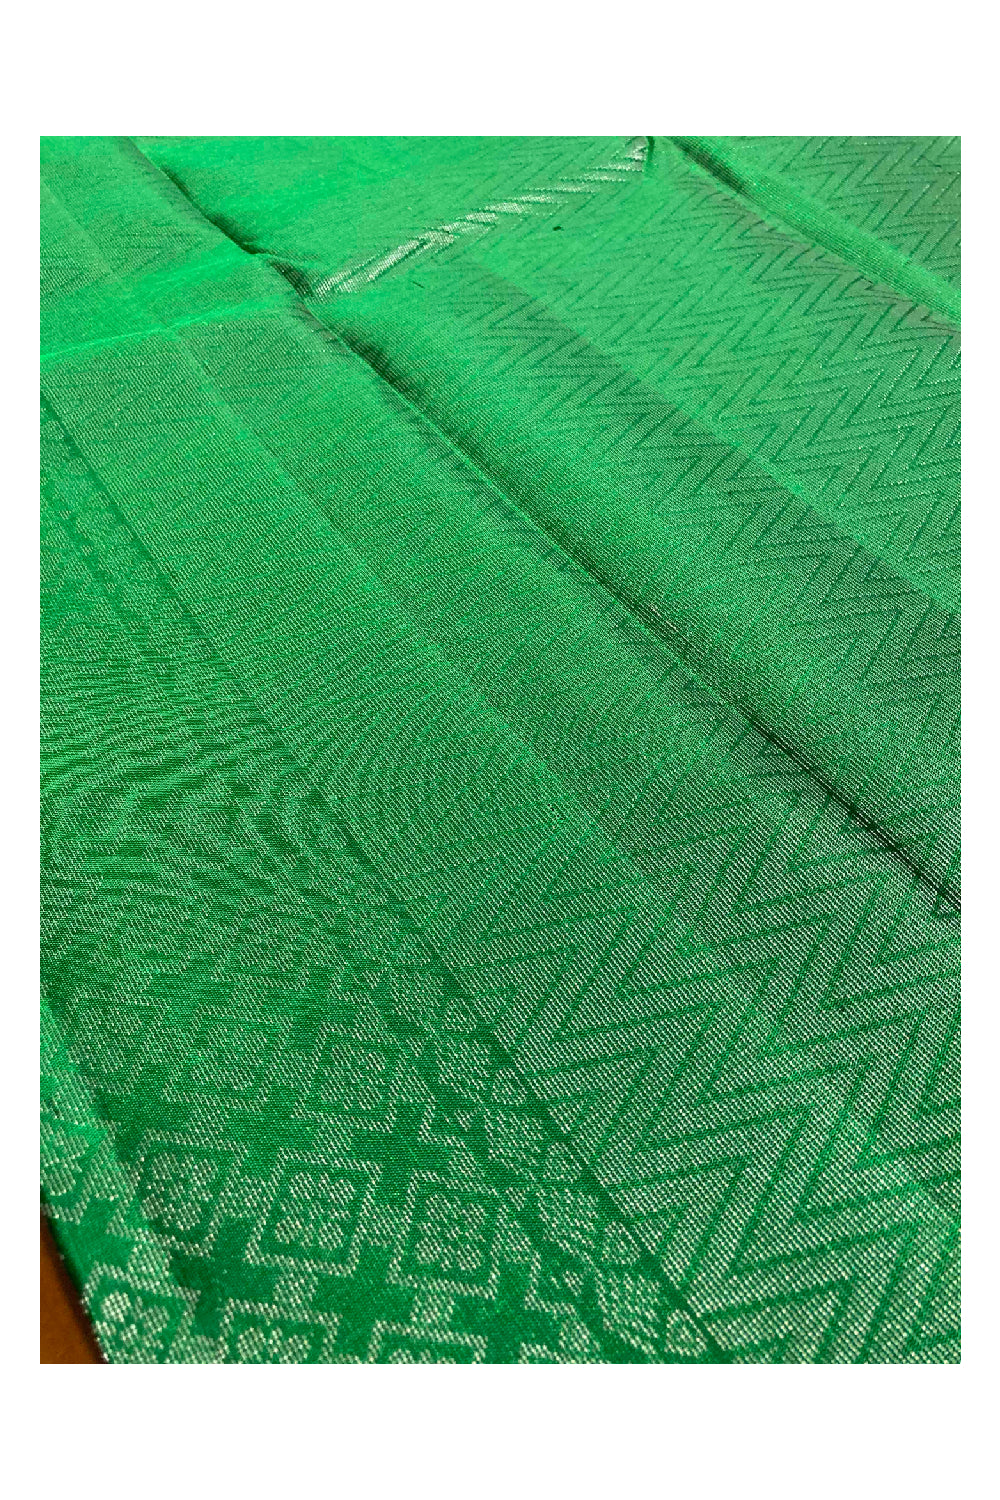 Southloom Handloom Pure Silk Manthrakodi Kanchipuram Saree in Single Green Colour and Silver Zari Motifs